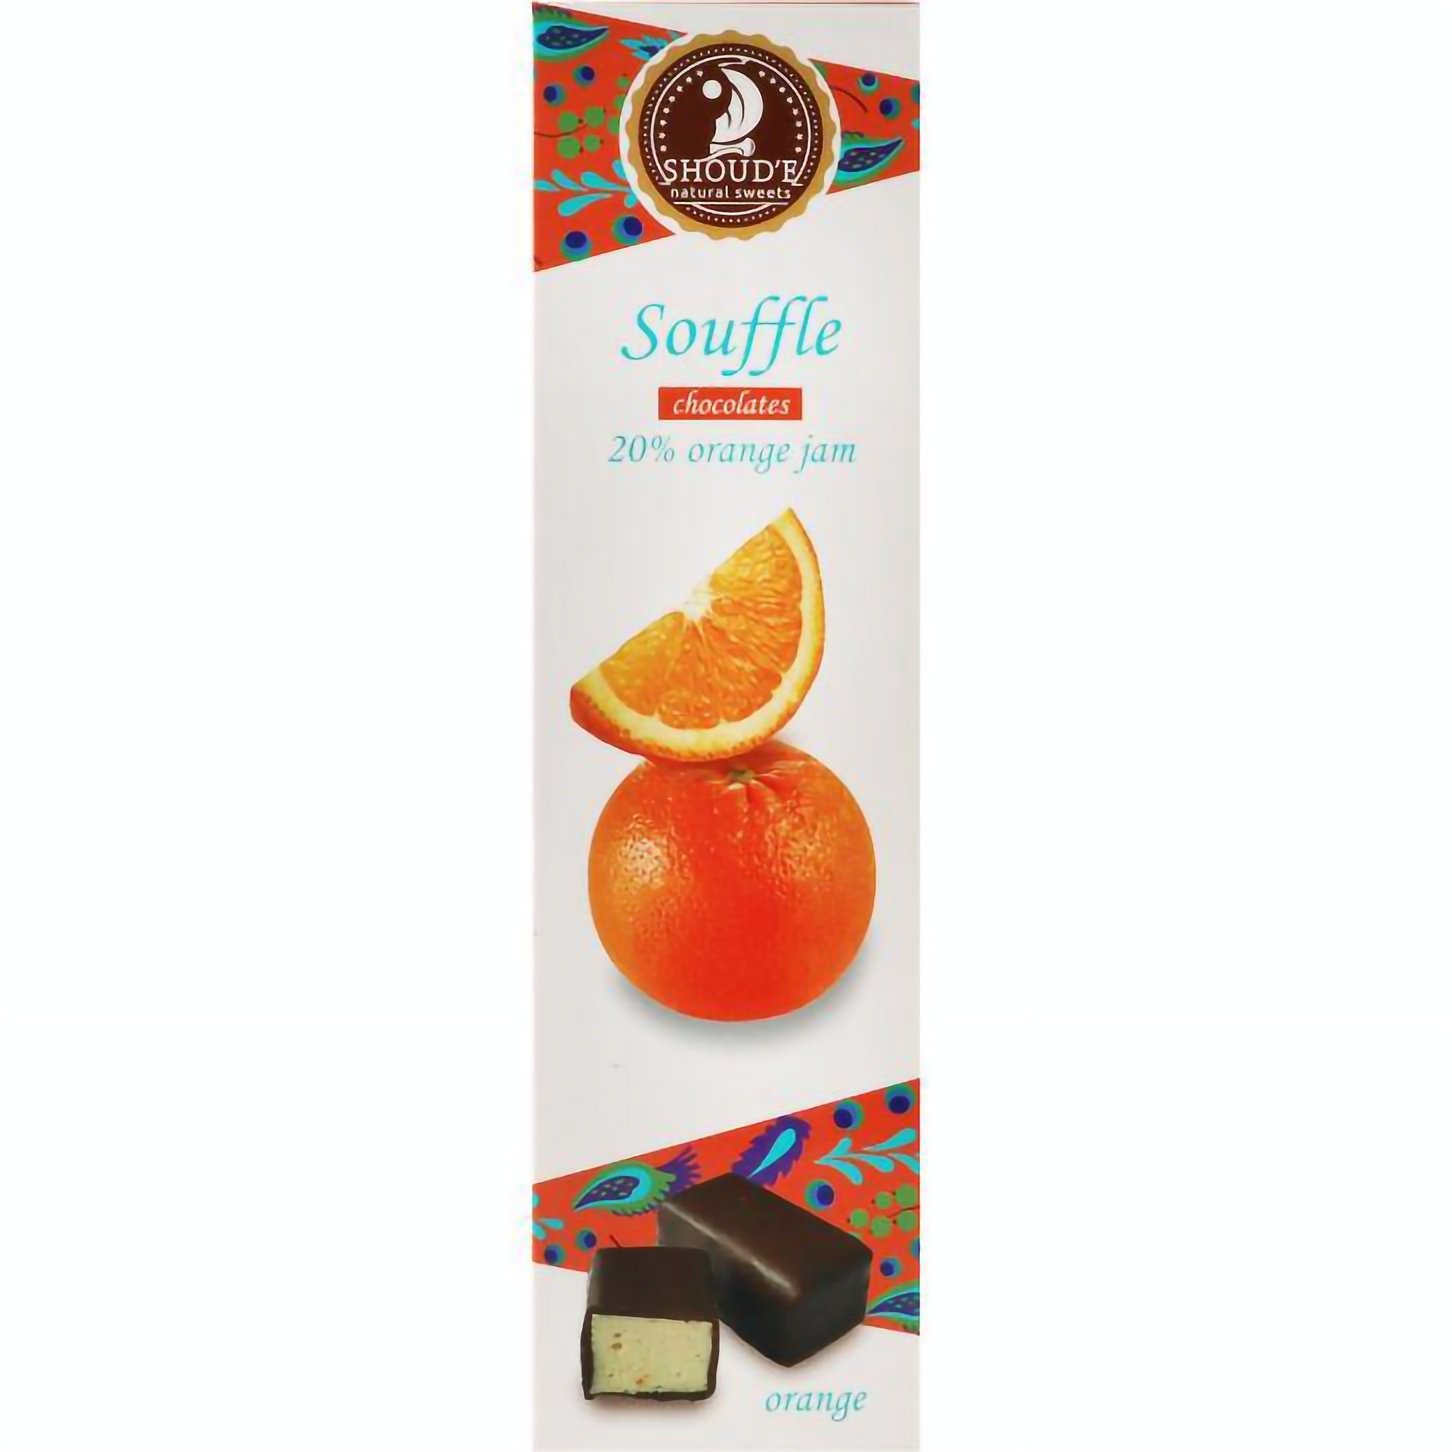 Цукерки Shoud'e Souffle Orange шоколадні, 90 г (929737) - фото 1